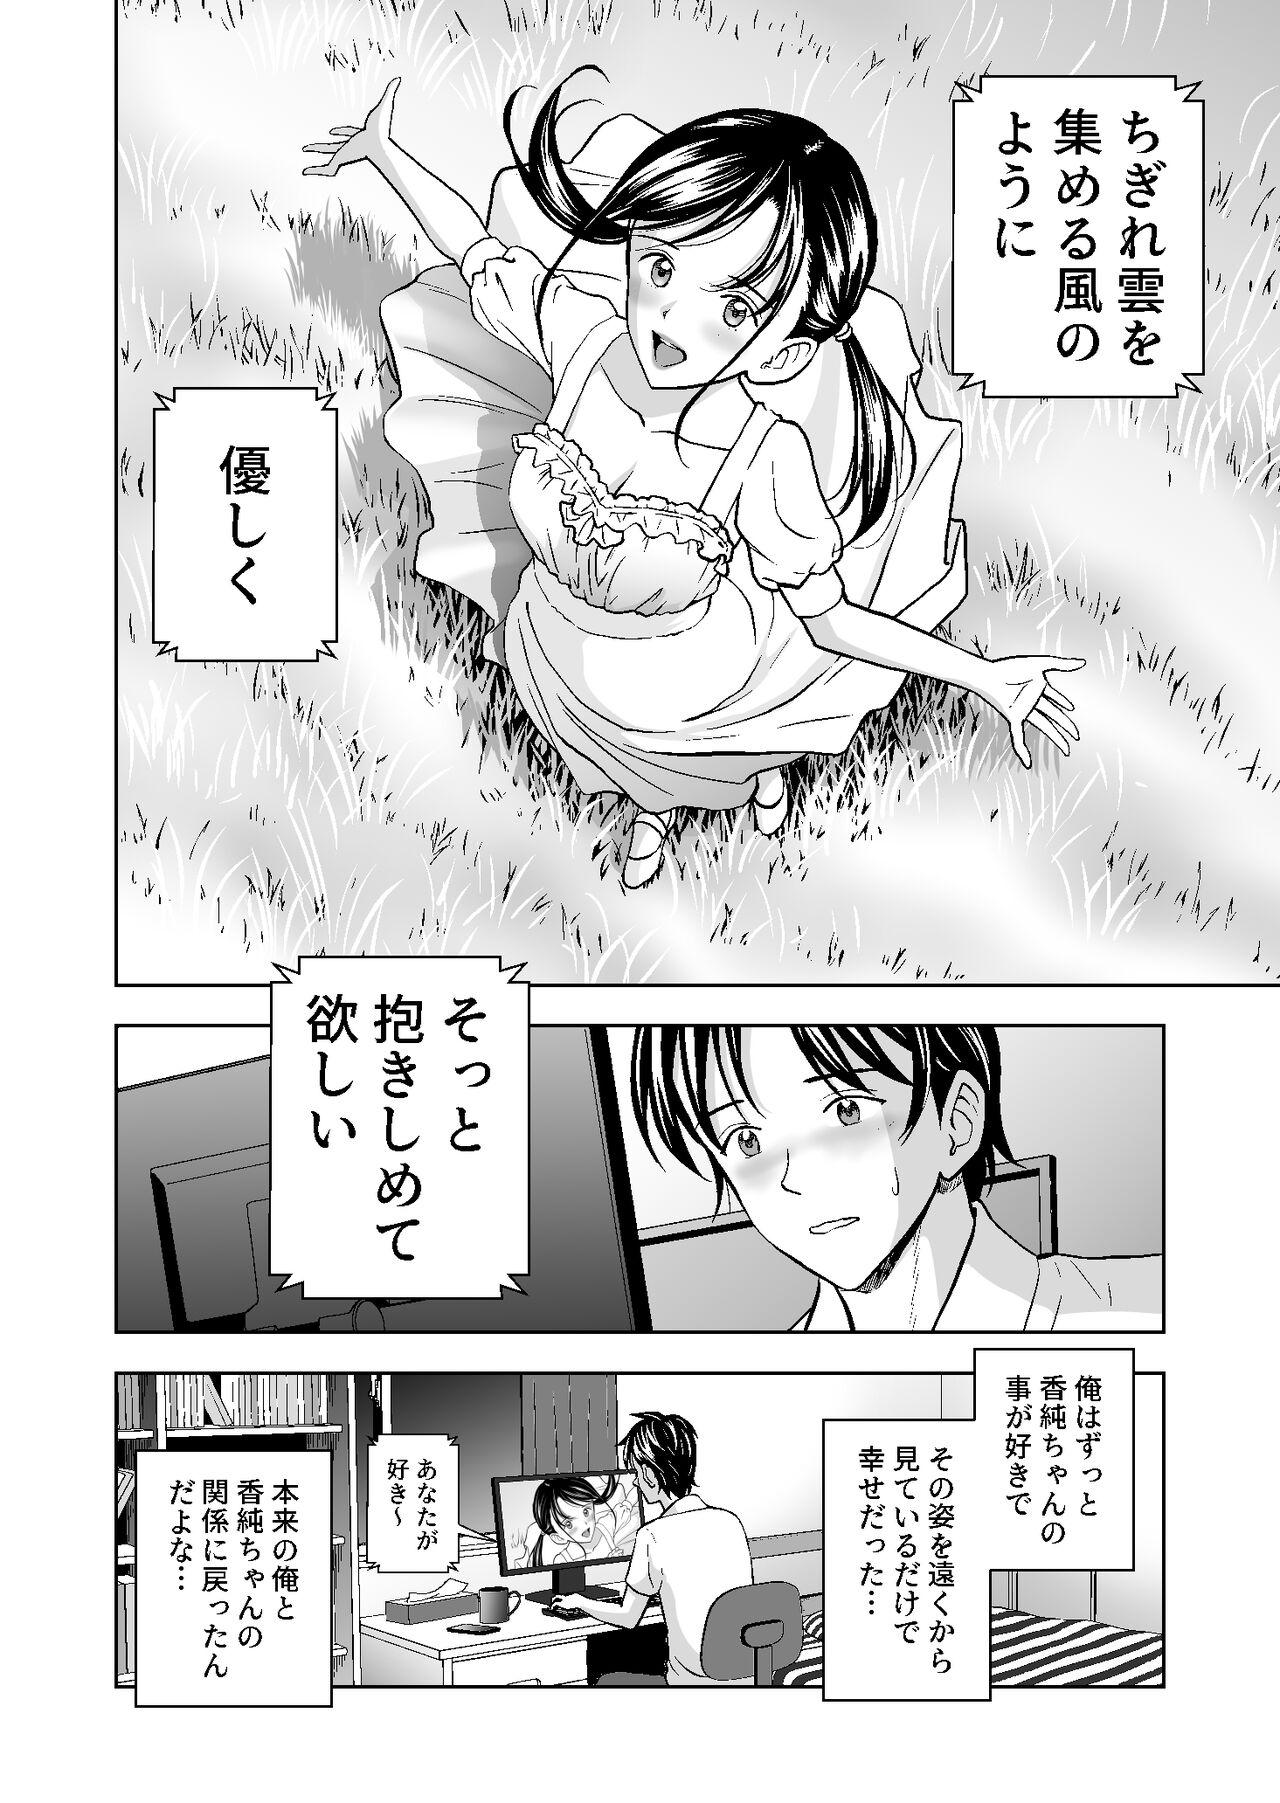 Shaved 春くらべ4 - Original Putita - Page 2